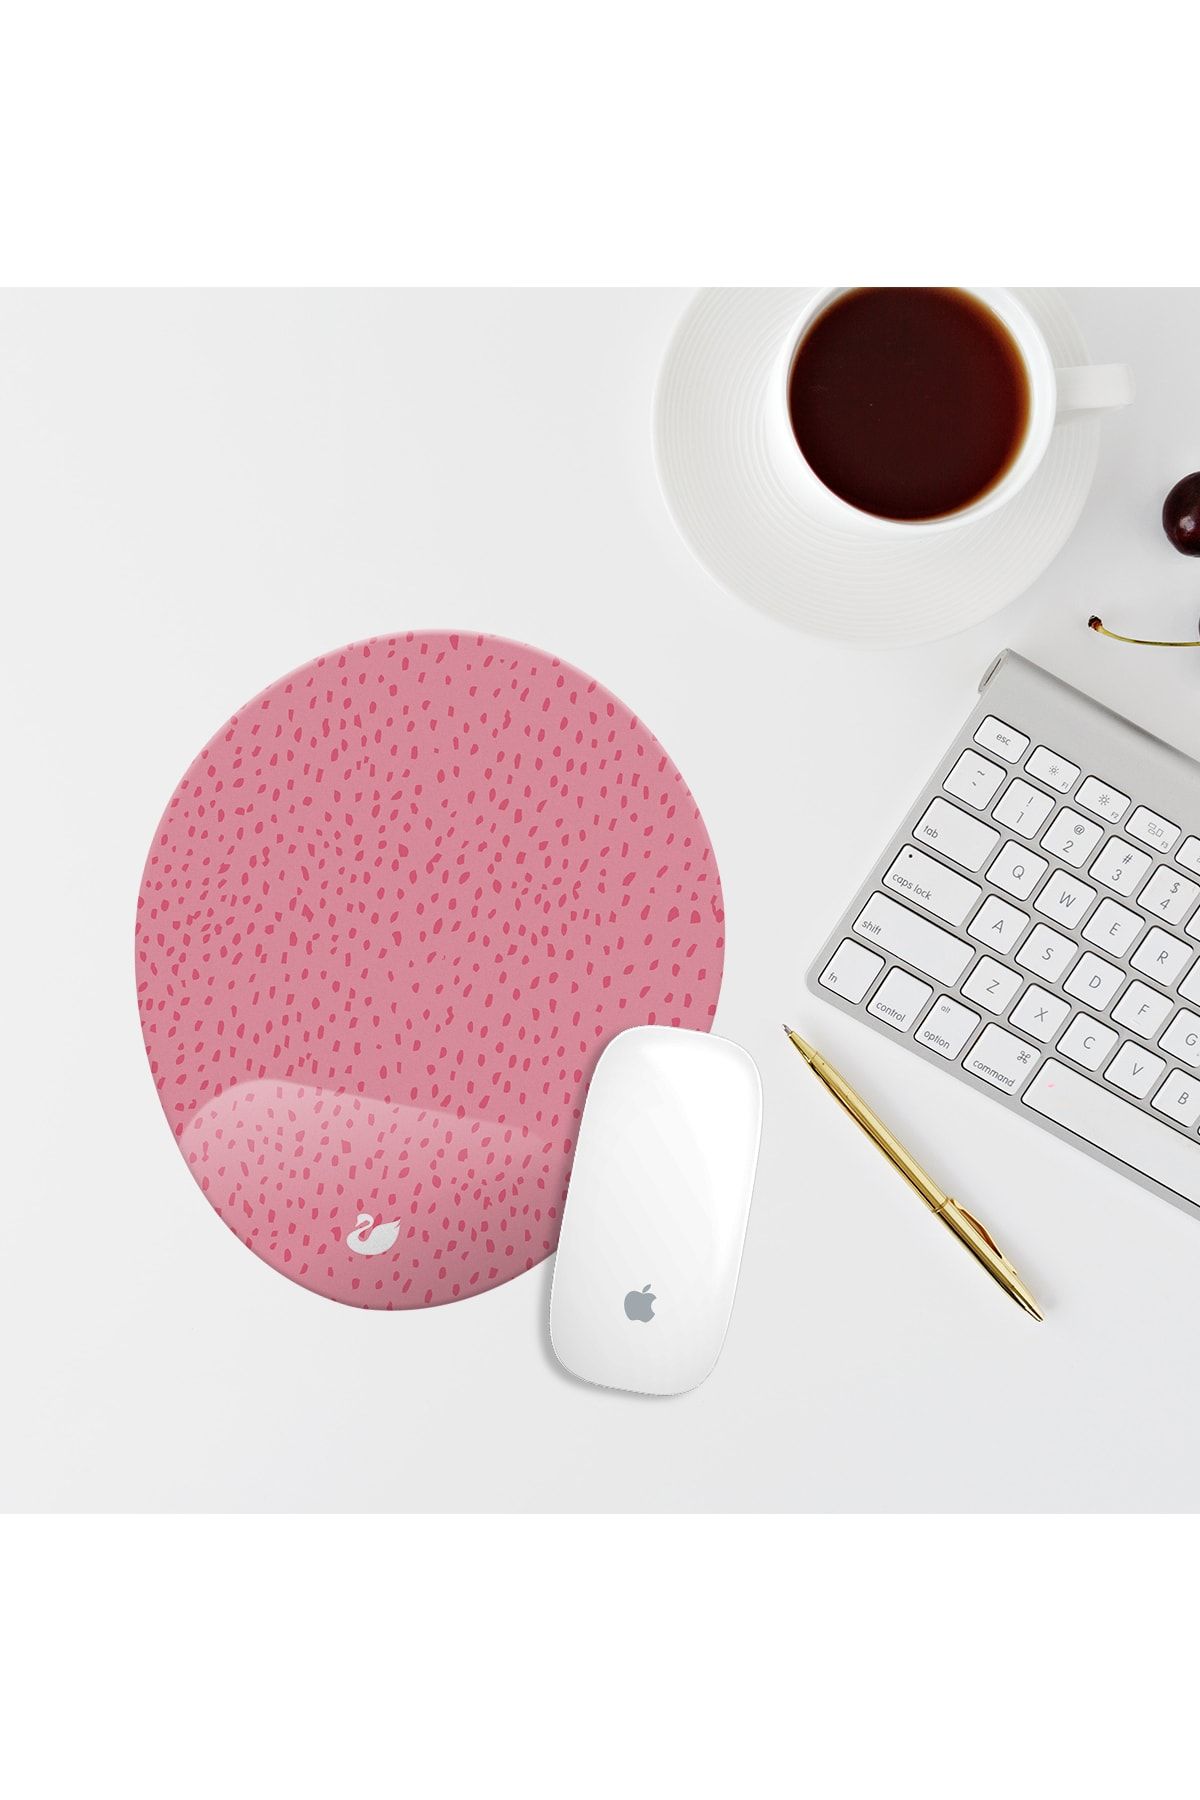 Özer Store Pembe Renkli Bilek Destekli Oval Mouse Pad Mouse Altlığı